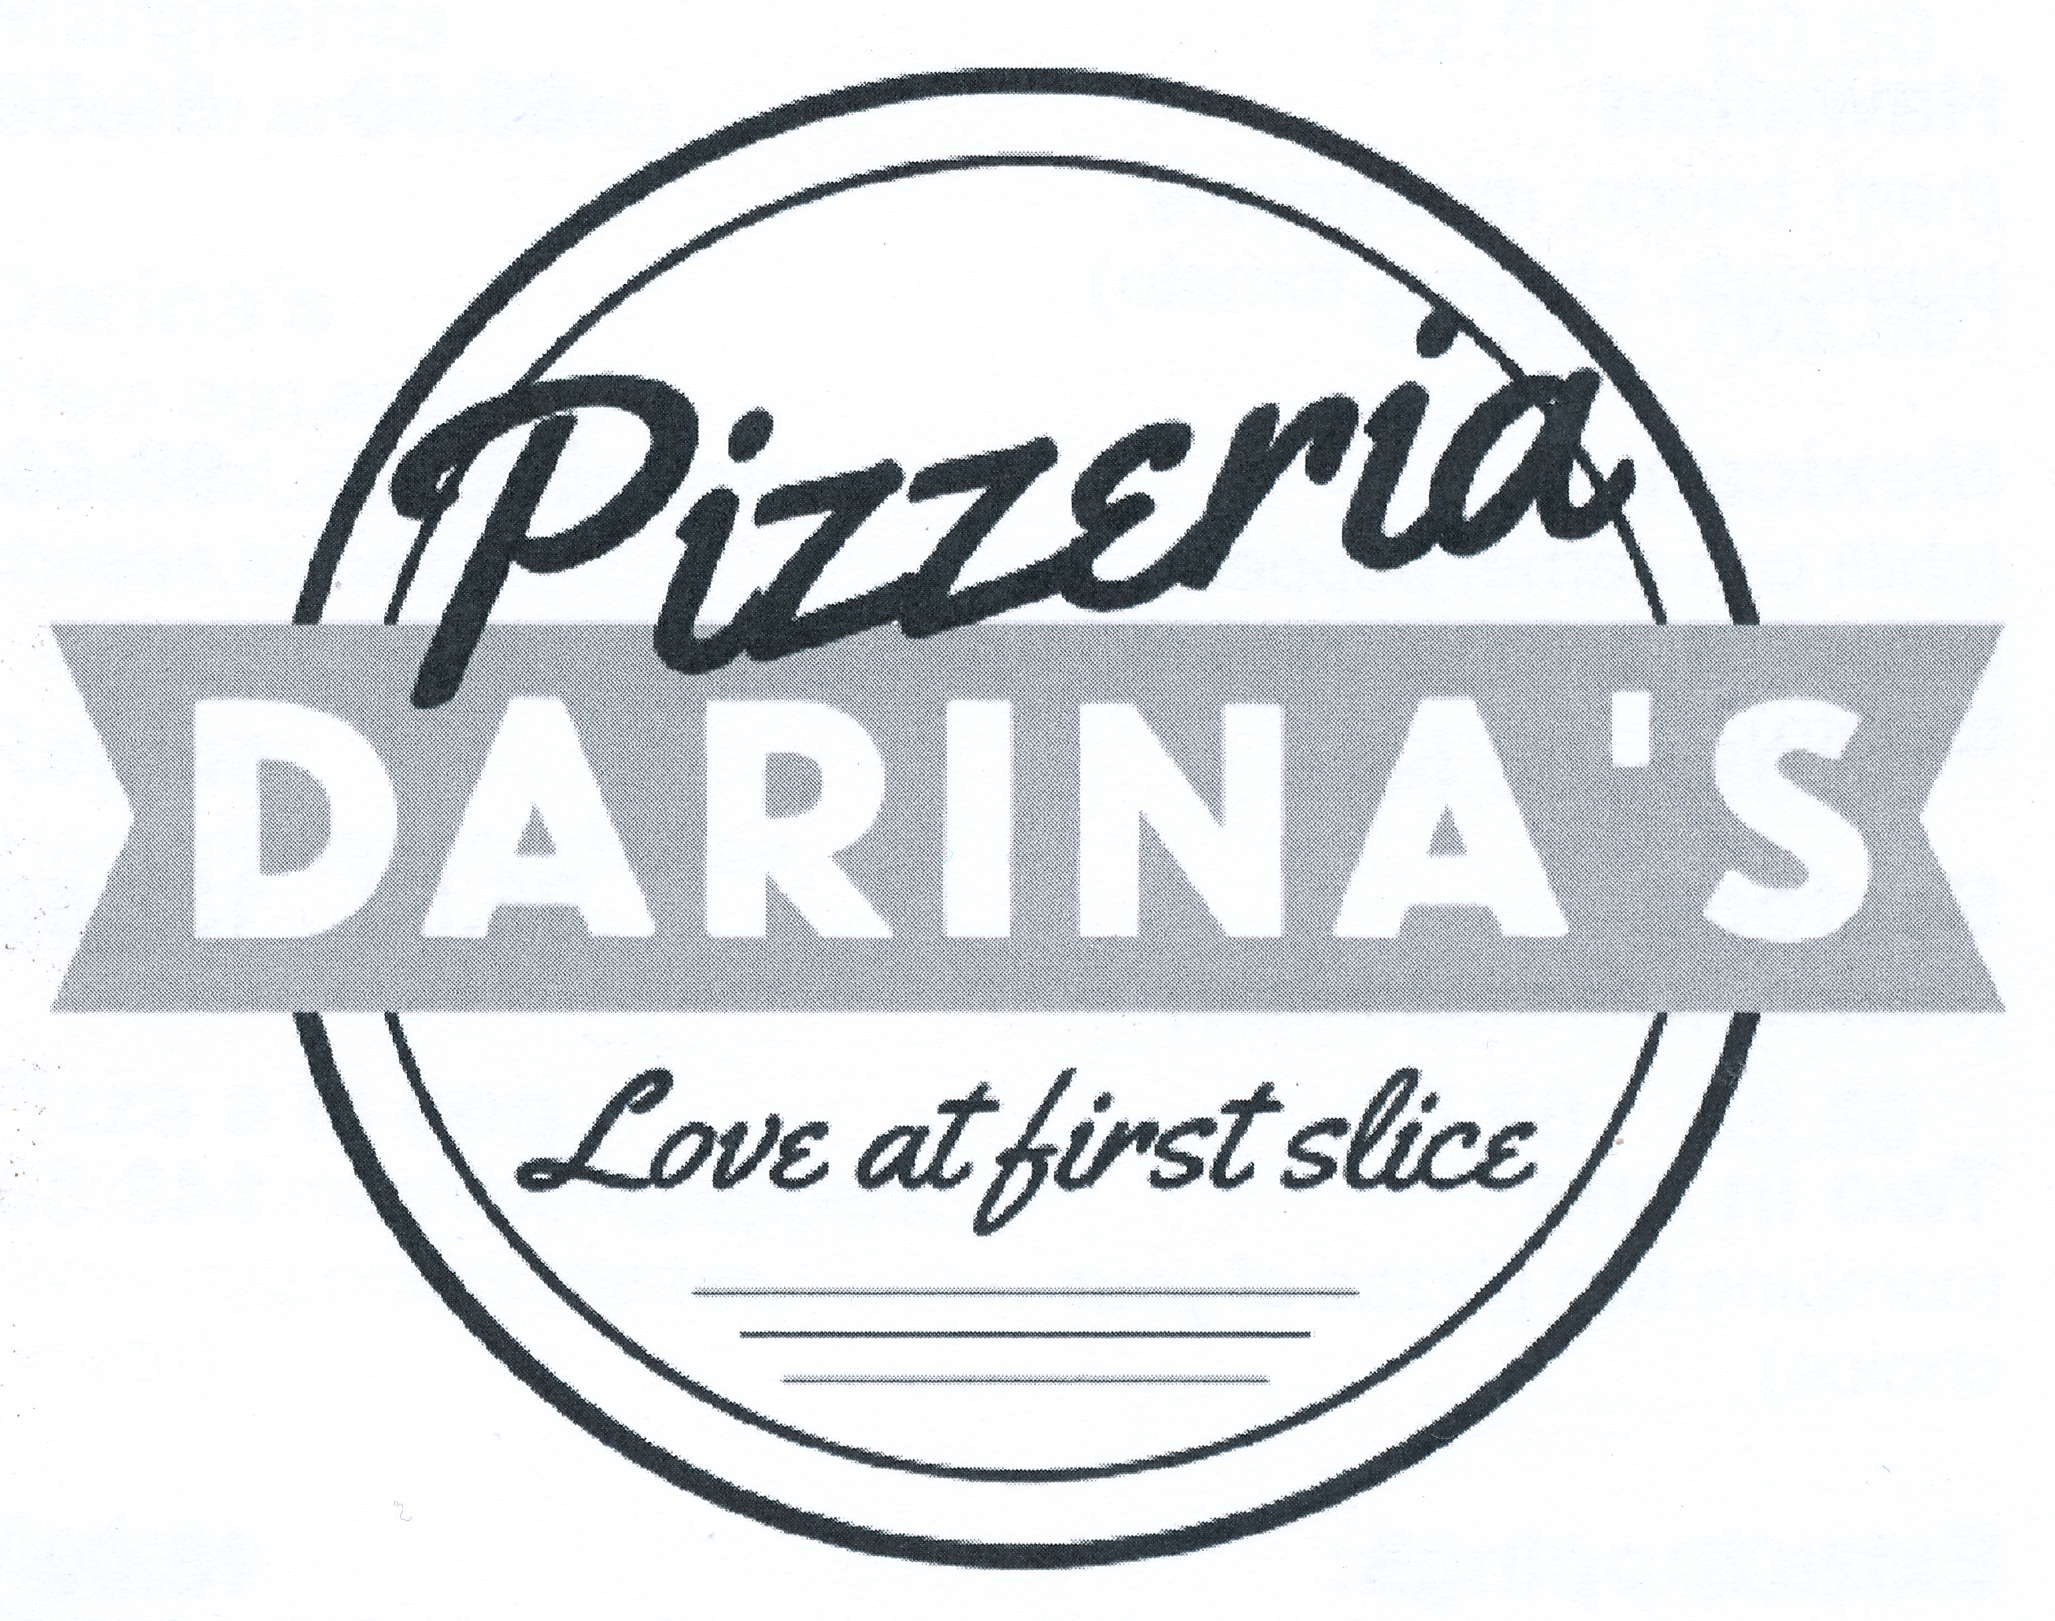 Darina's Pizzeria